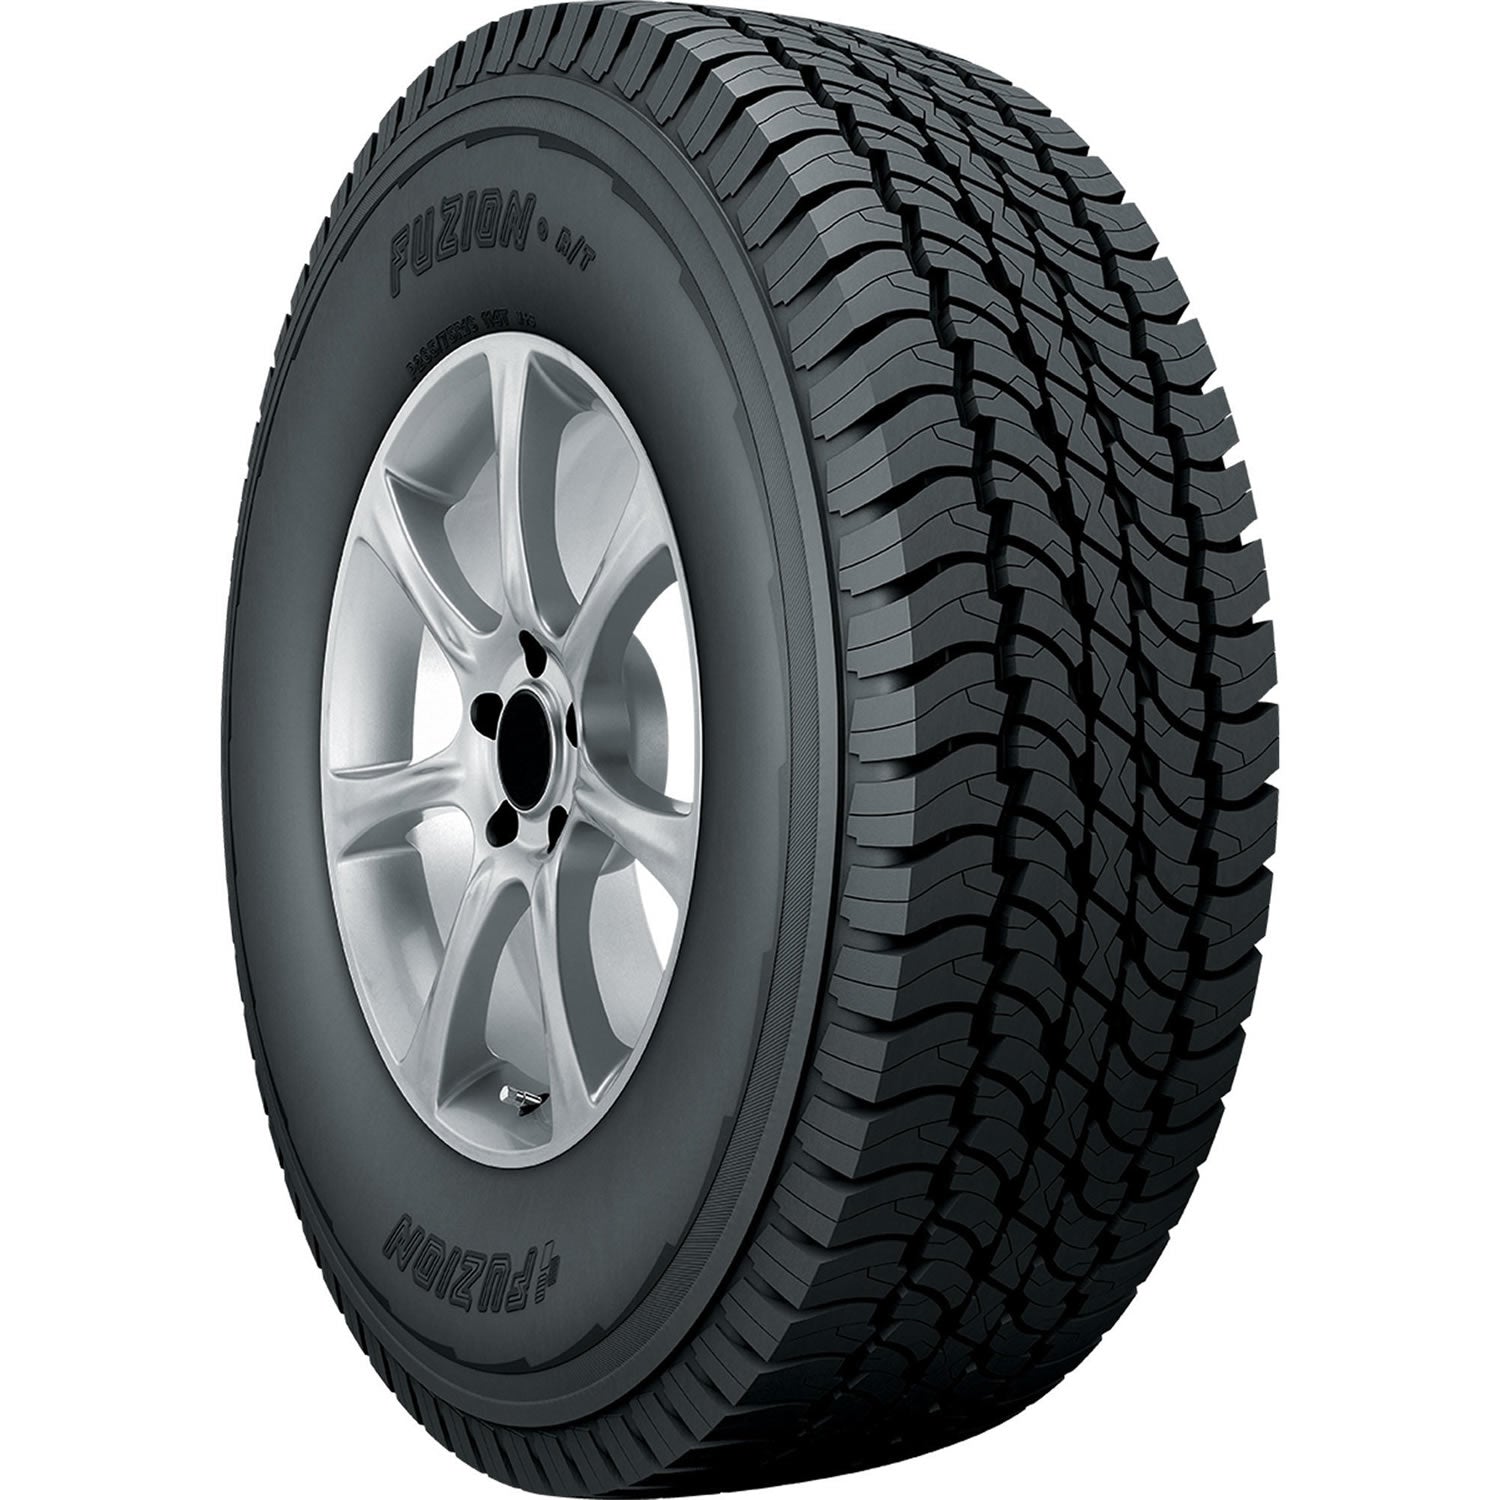 FUZION AT P265/70R17 (31.7X10.4R 17) Tires